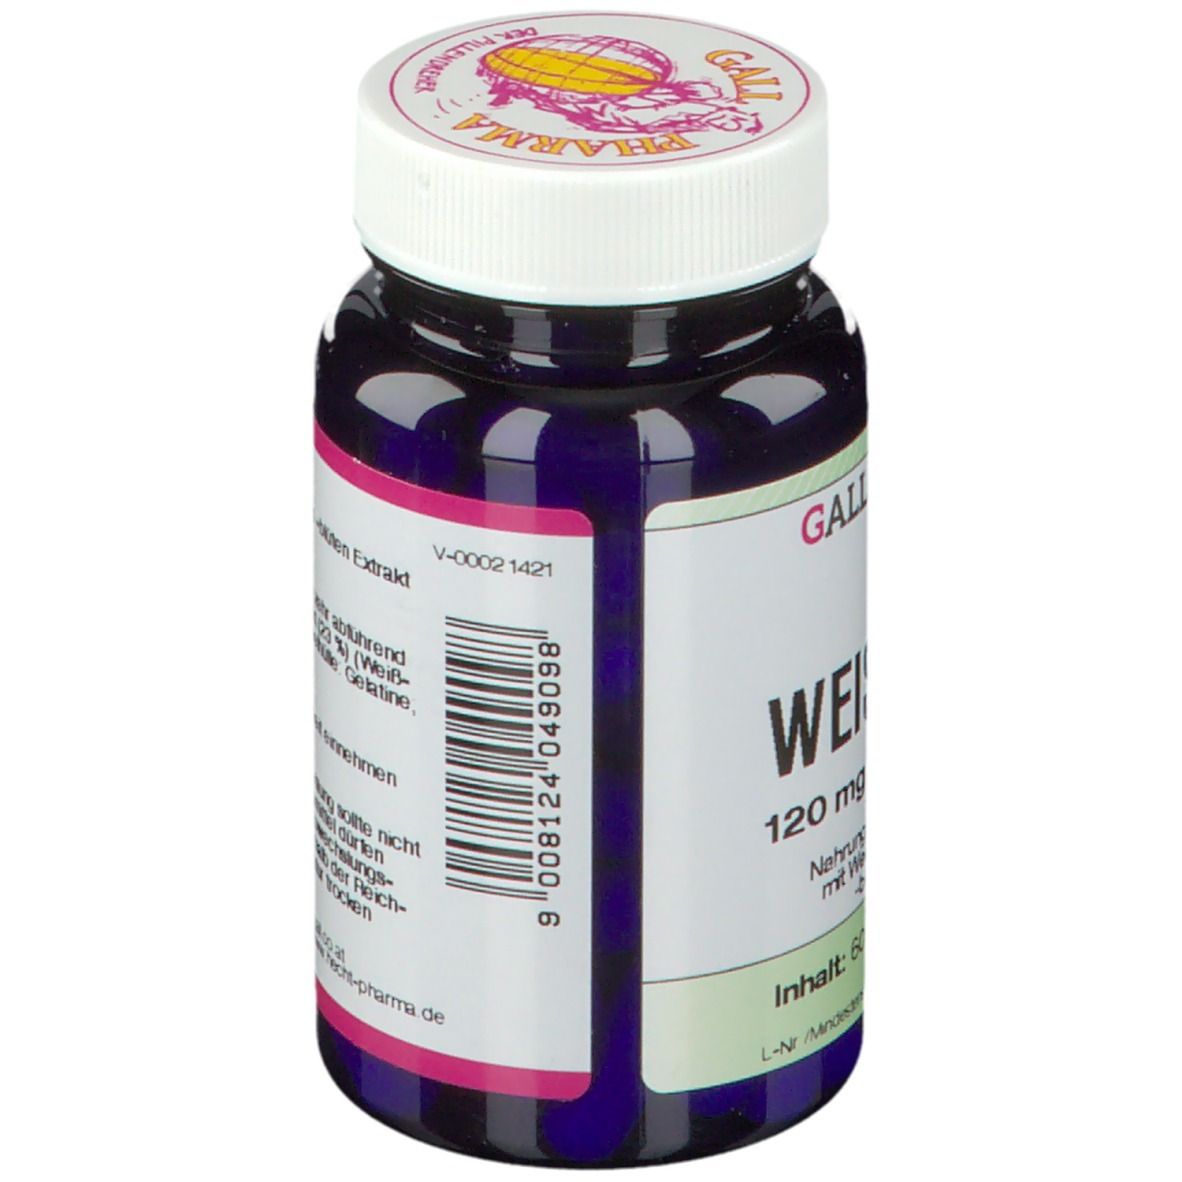 GALL PHARMA Weißdorn 120 mg